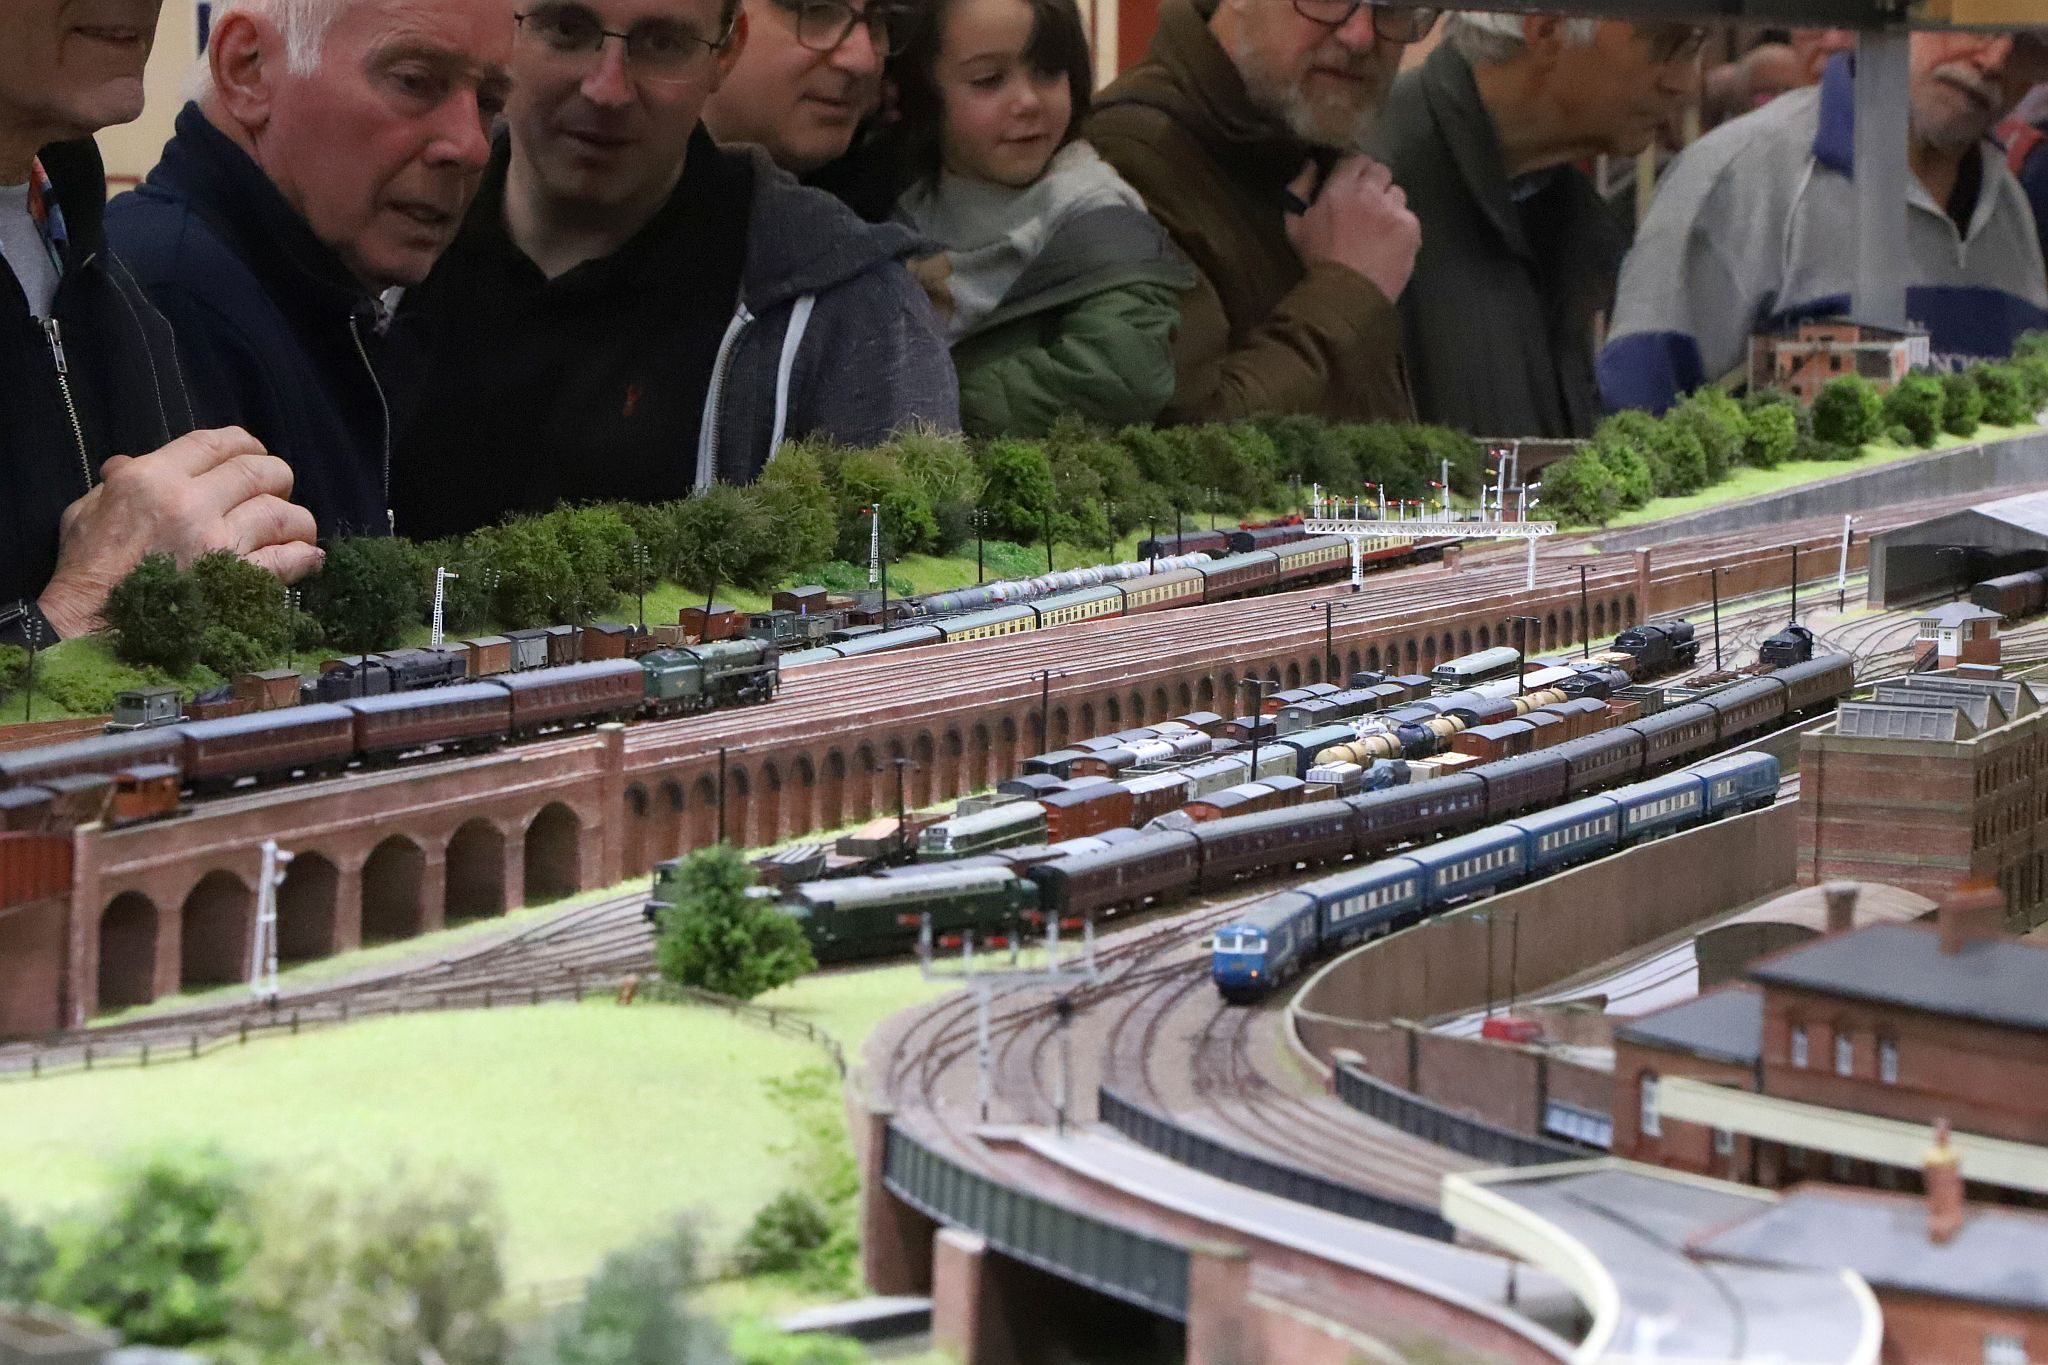 James Street N Gauge model railway layout. 2023 London Festival of Railway Modelling, Alexandra Palace, London